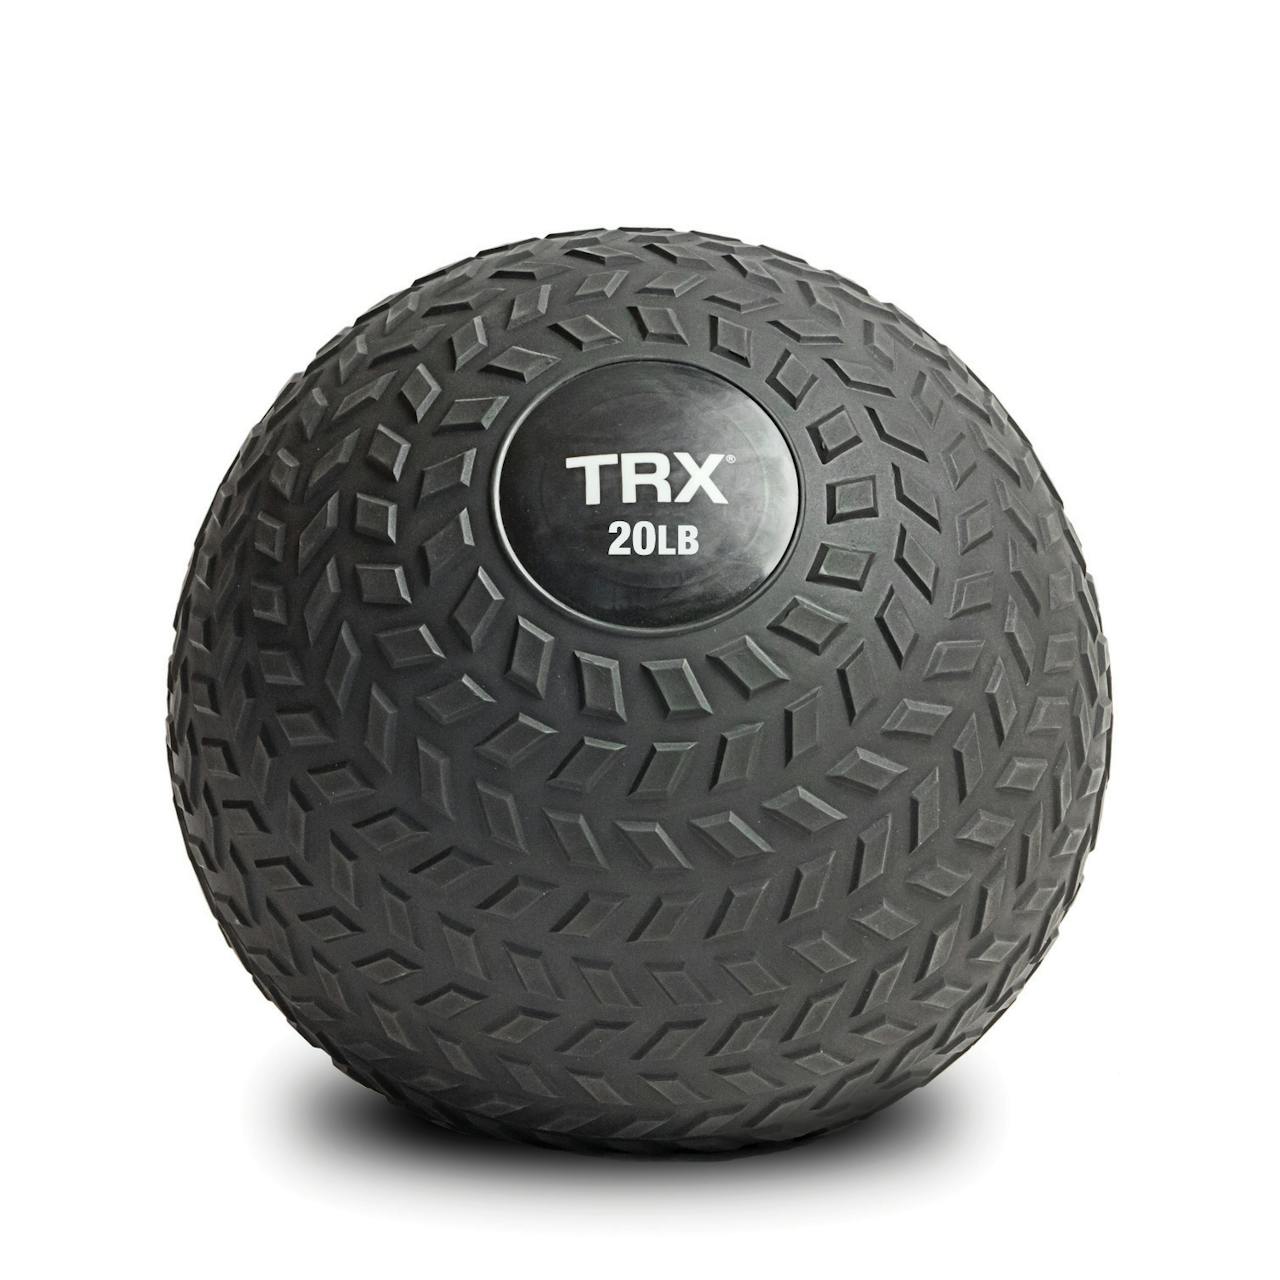 TRX Slam Ball - 20lb